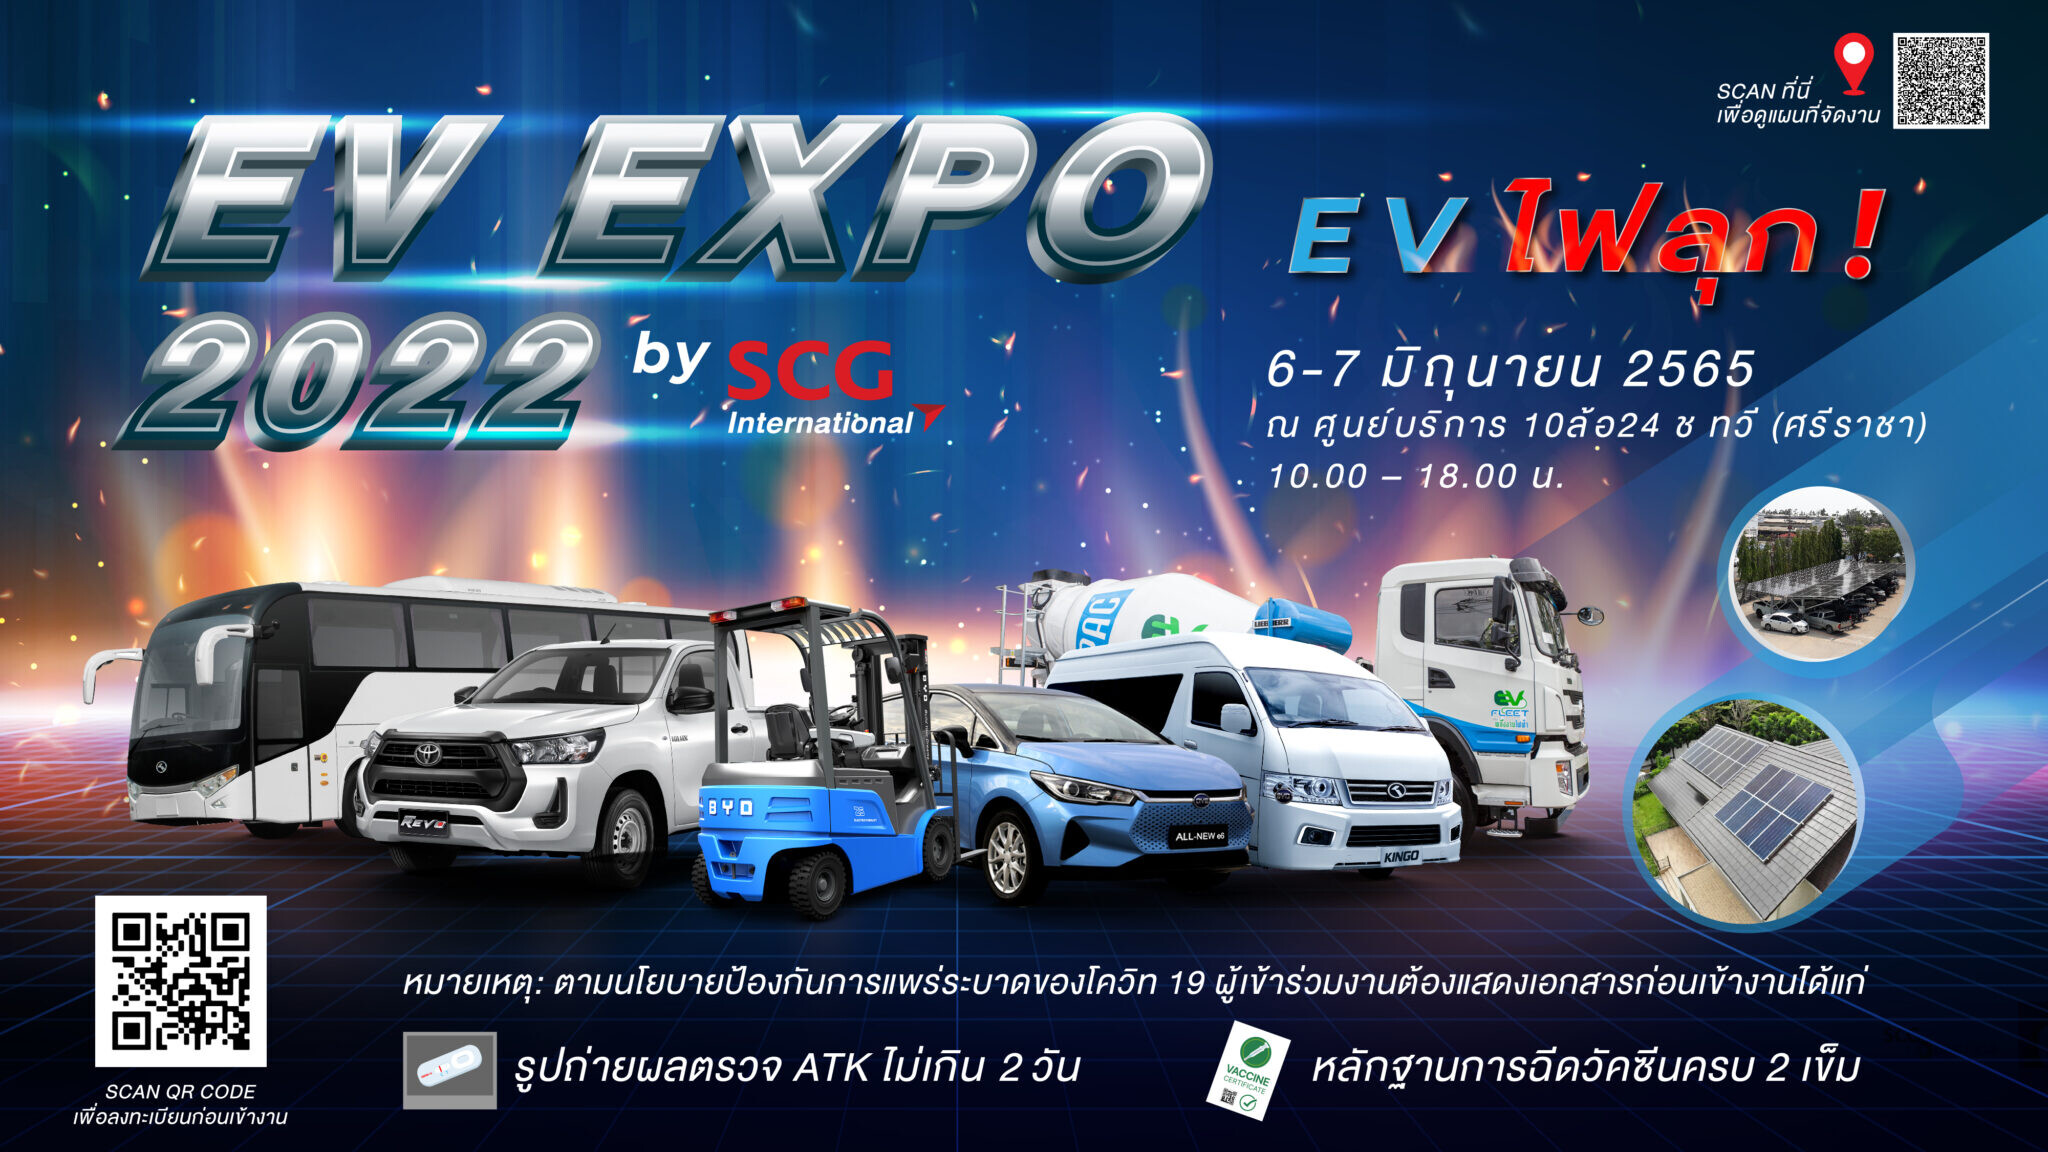 CHO ชวนร่วมงาน "EV EXPO 2022 by SCG International" 6-7 มิ.ย.นี้